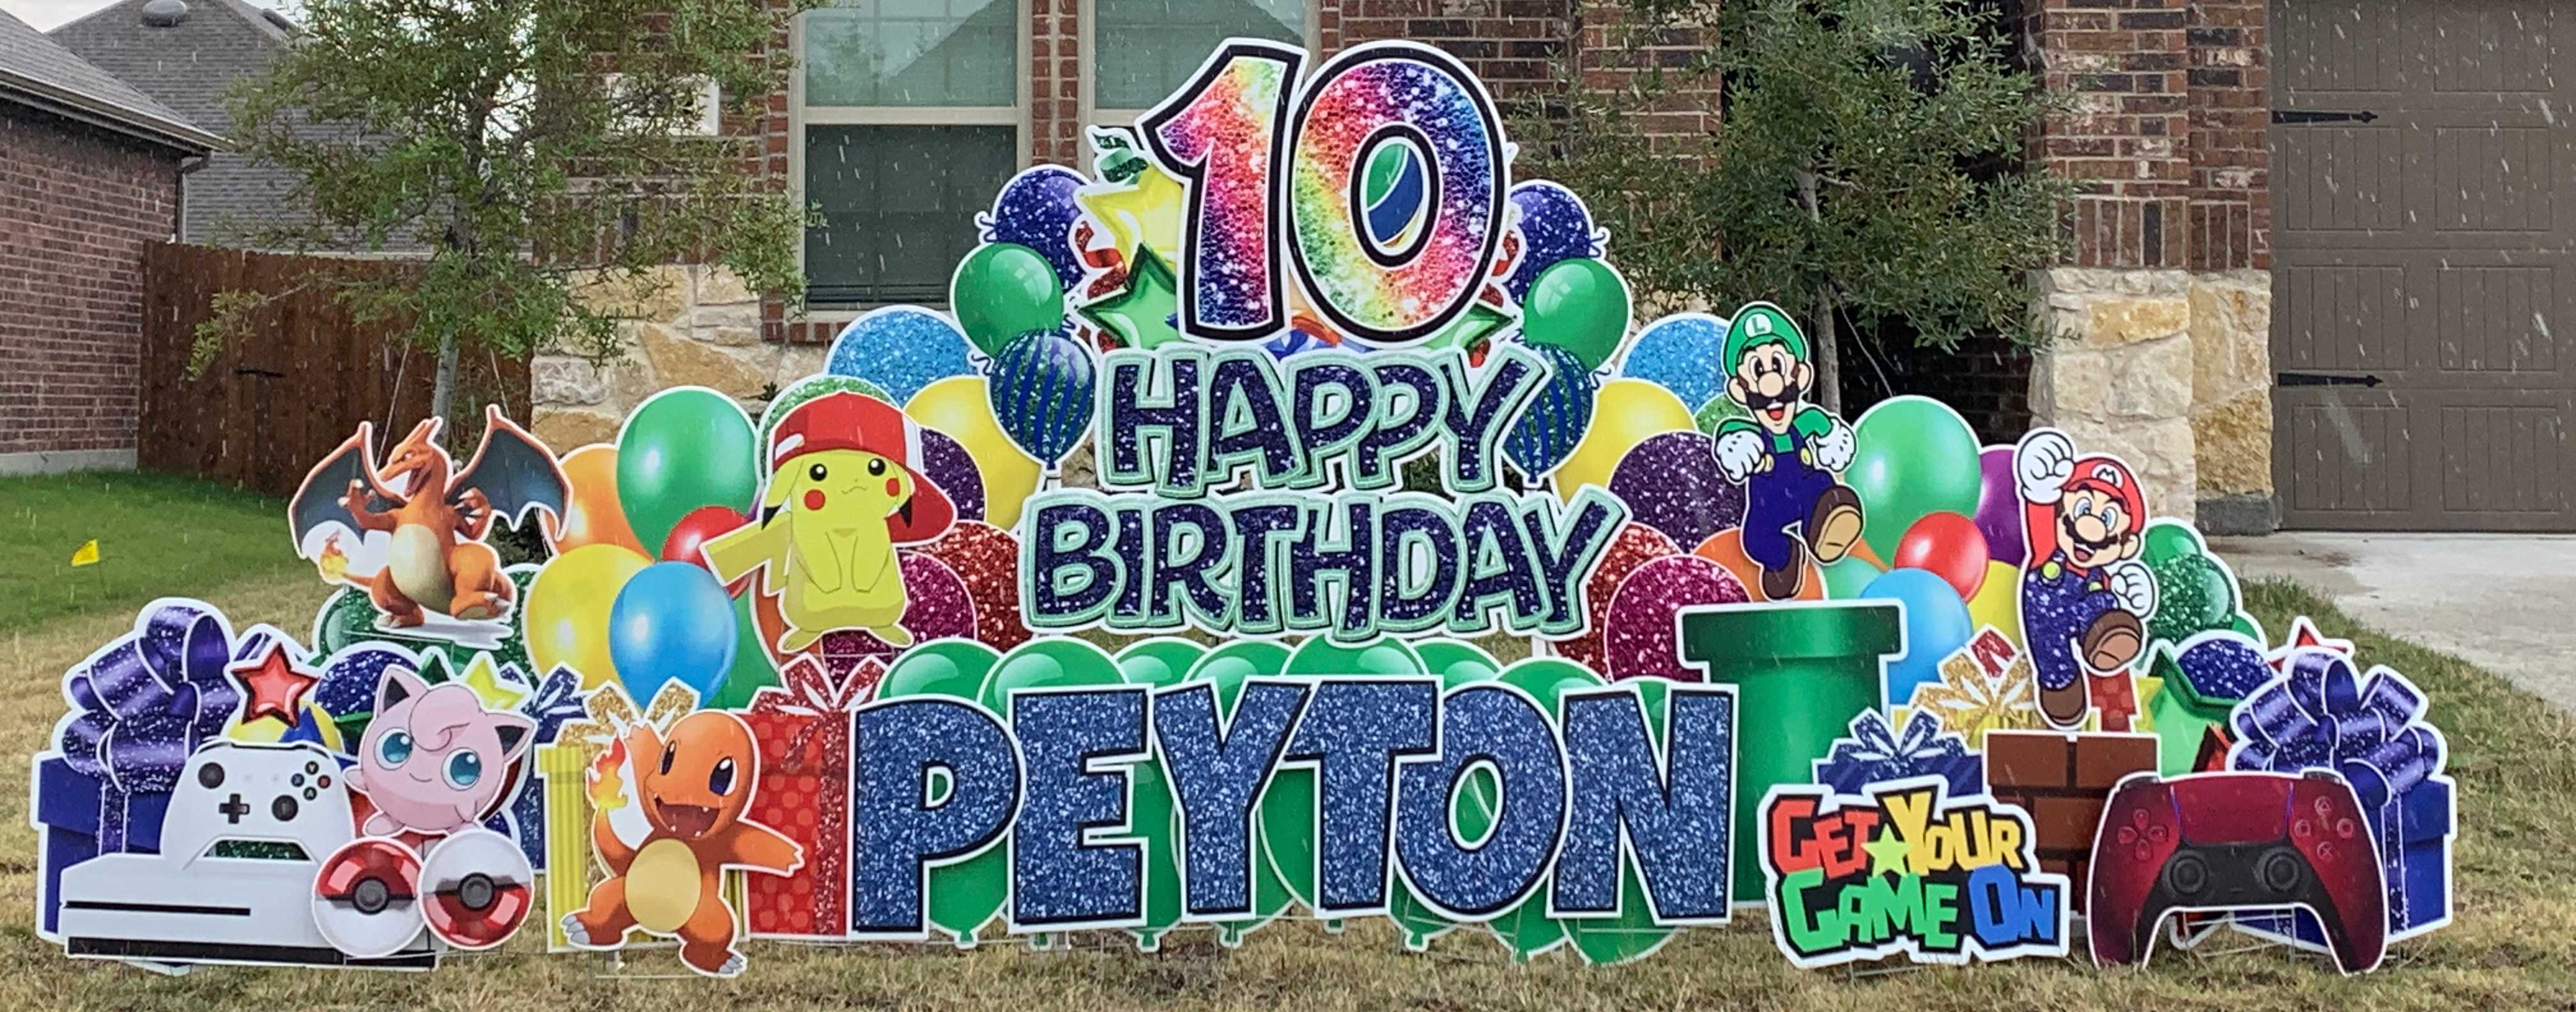 Yard card sign happy birthday peyton 